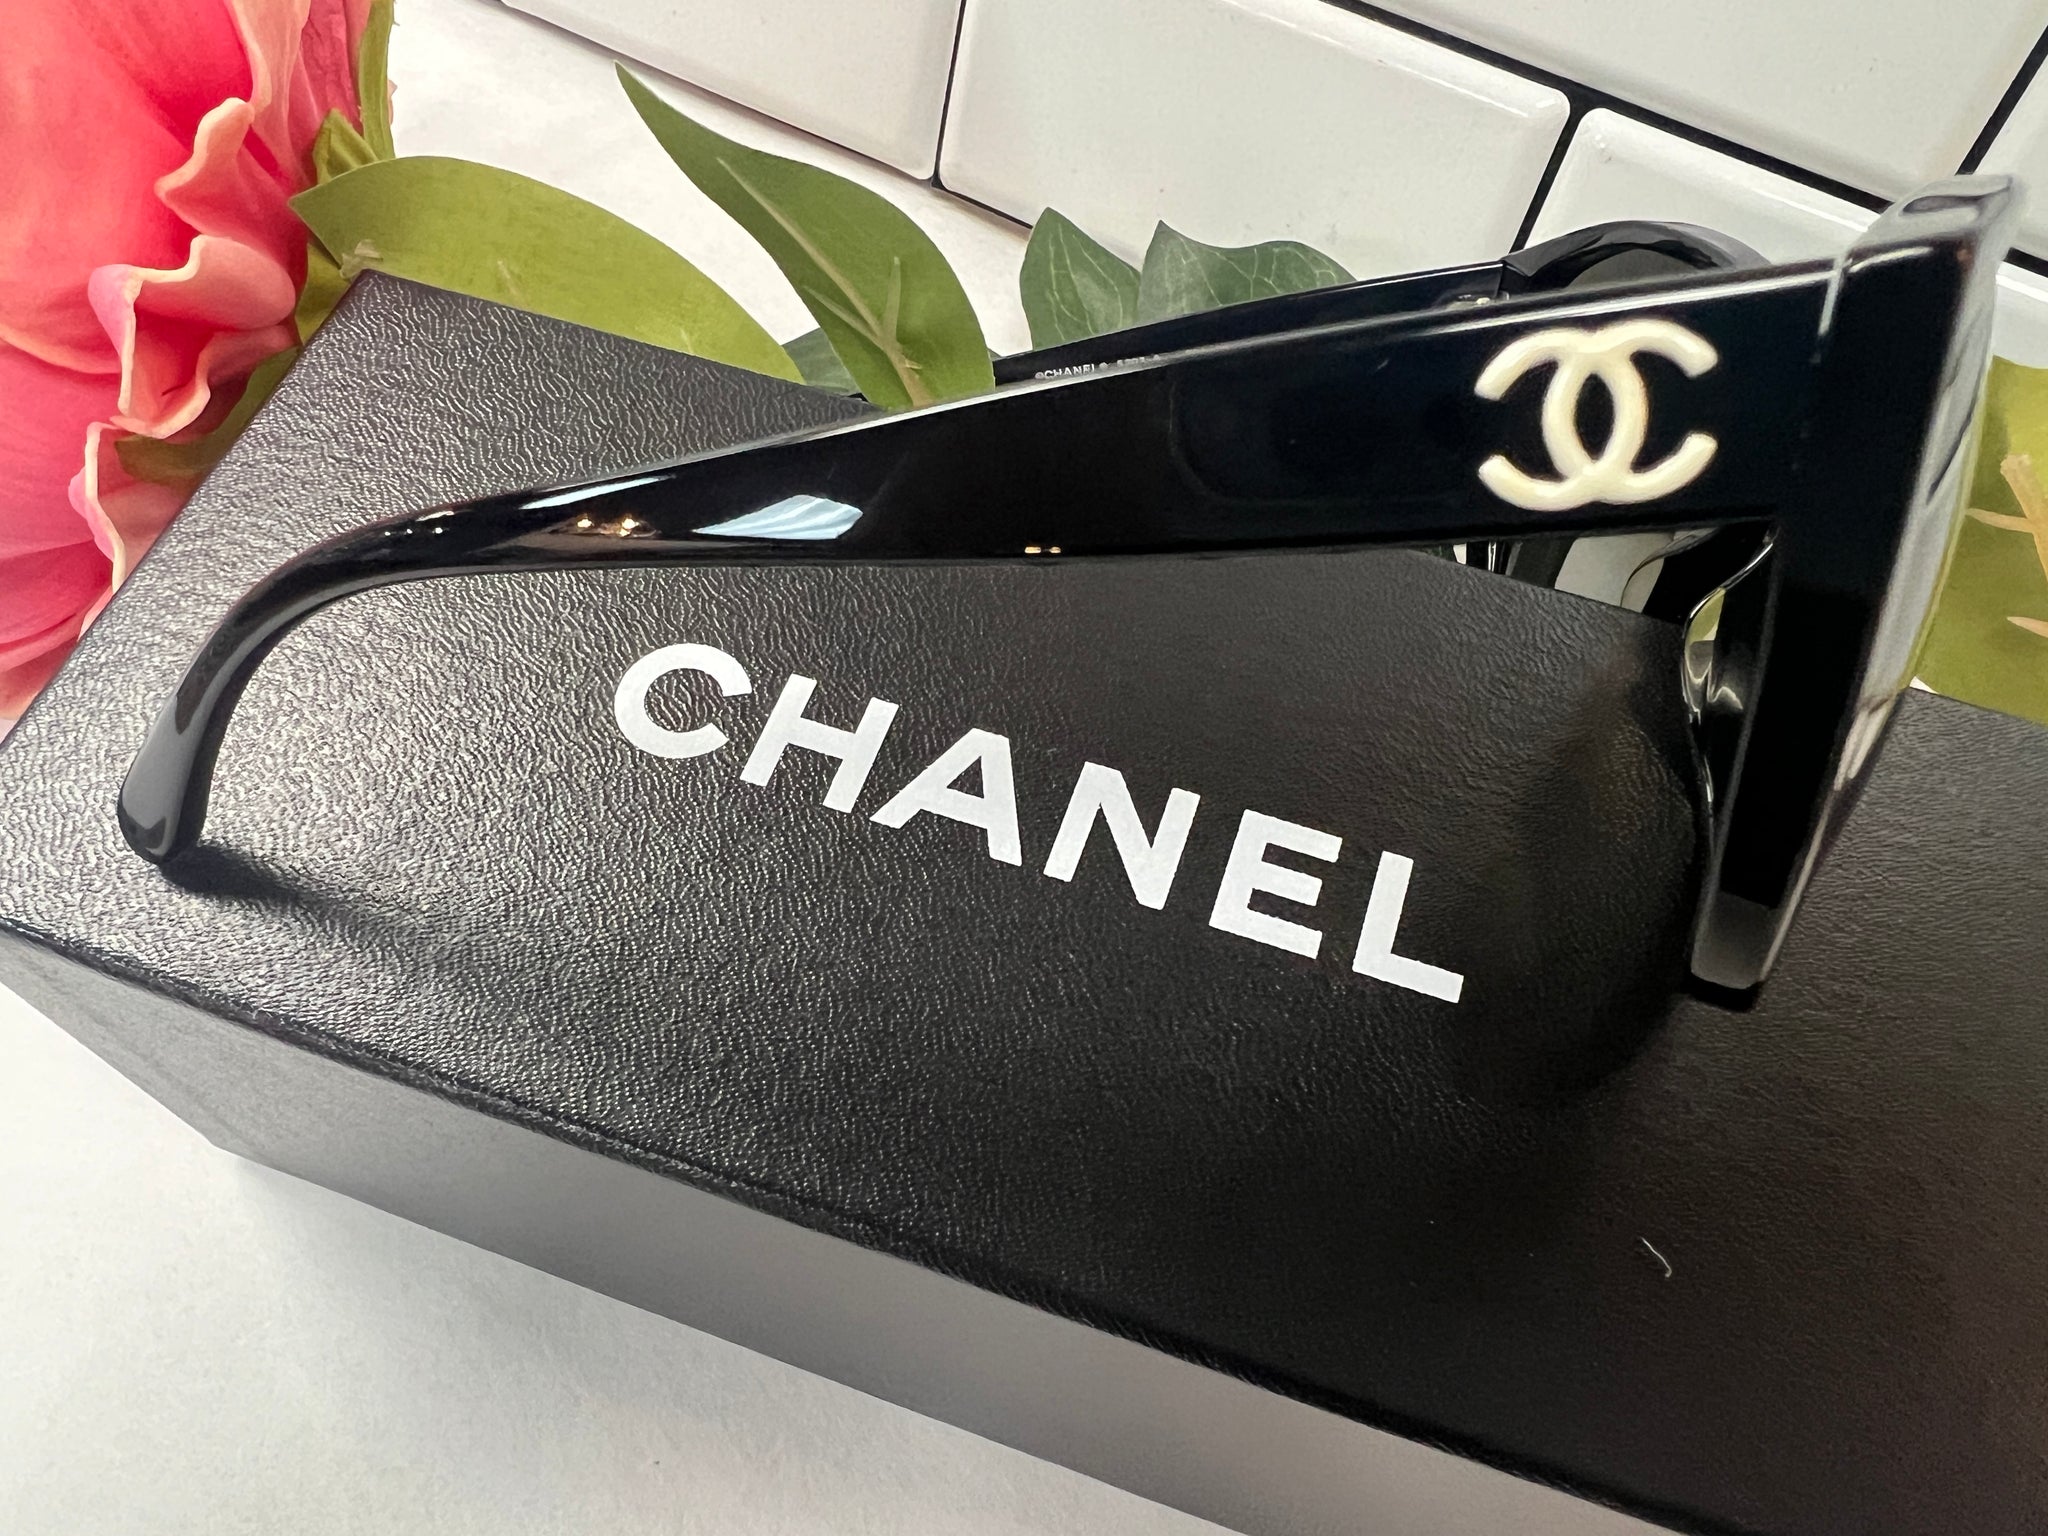 cc chanel sunglasses authentic